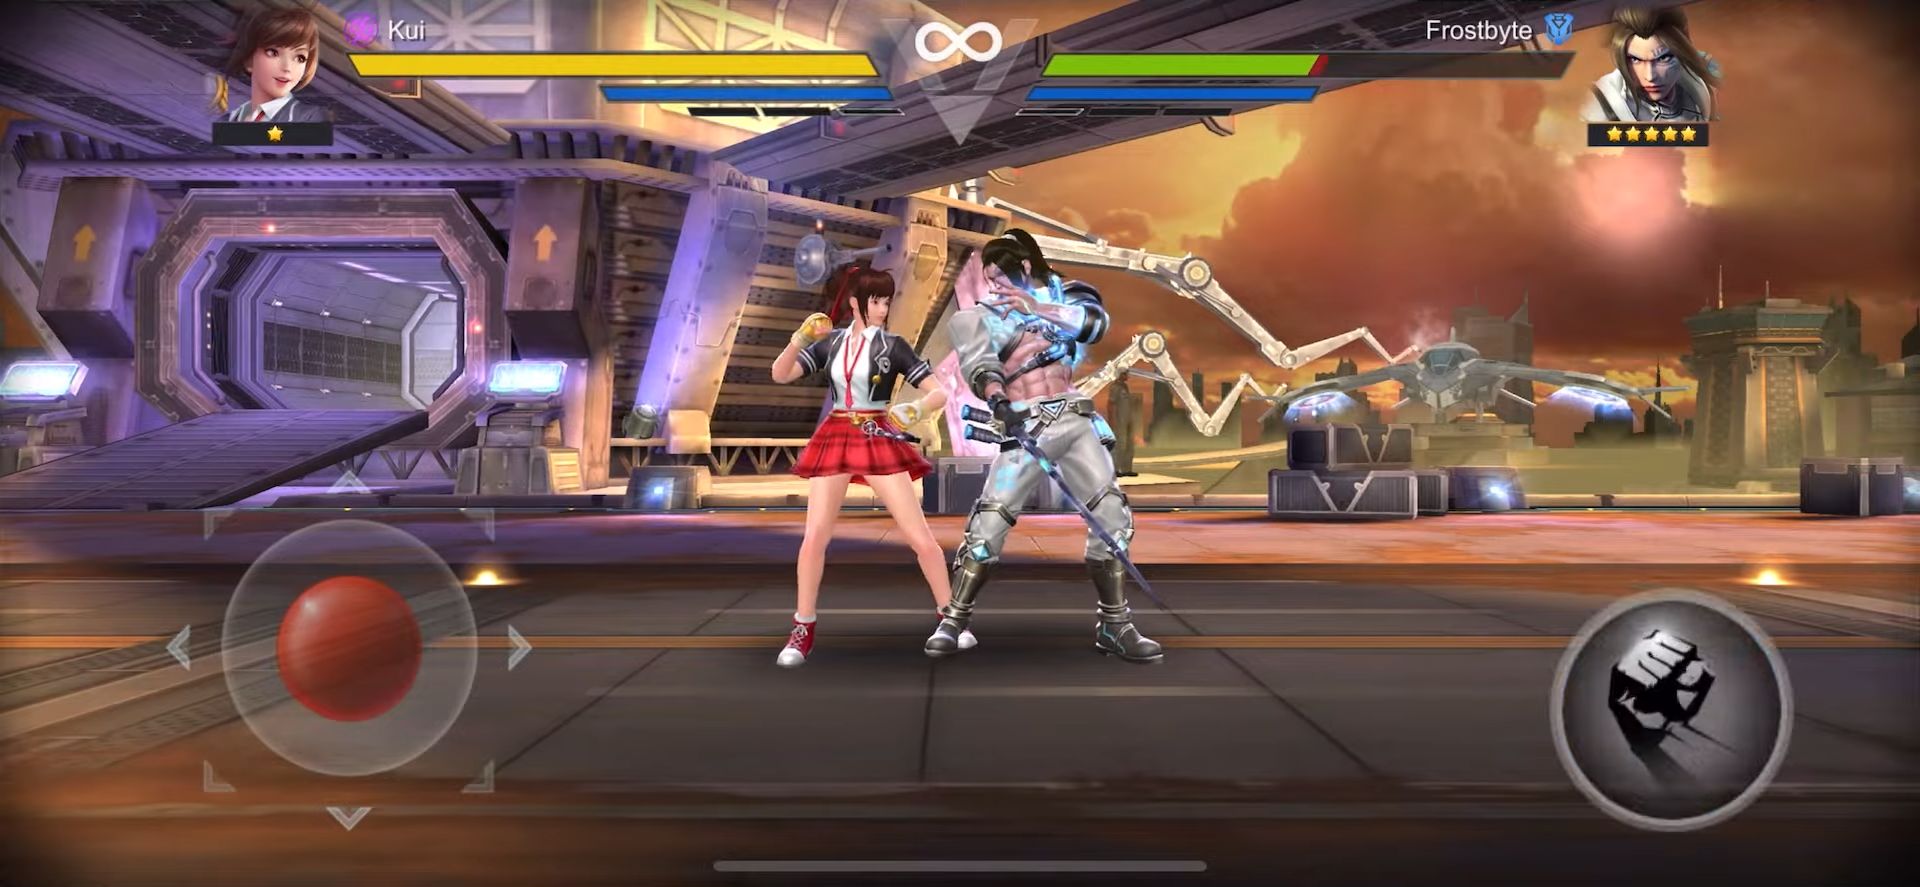 Descargar Final Fighter: Fighting Game gratis para Android.